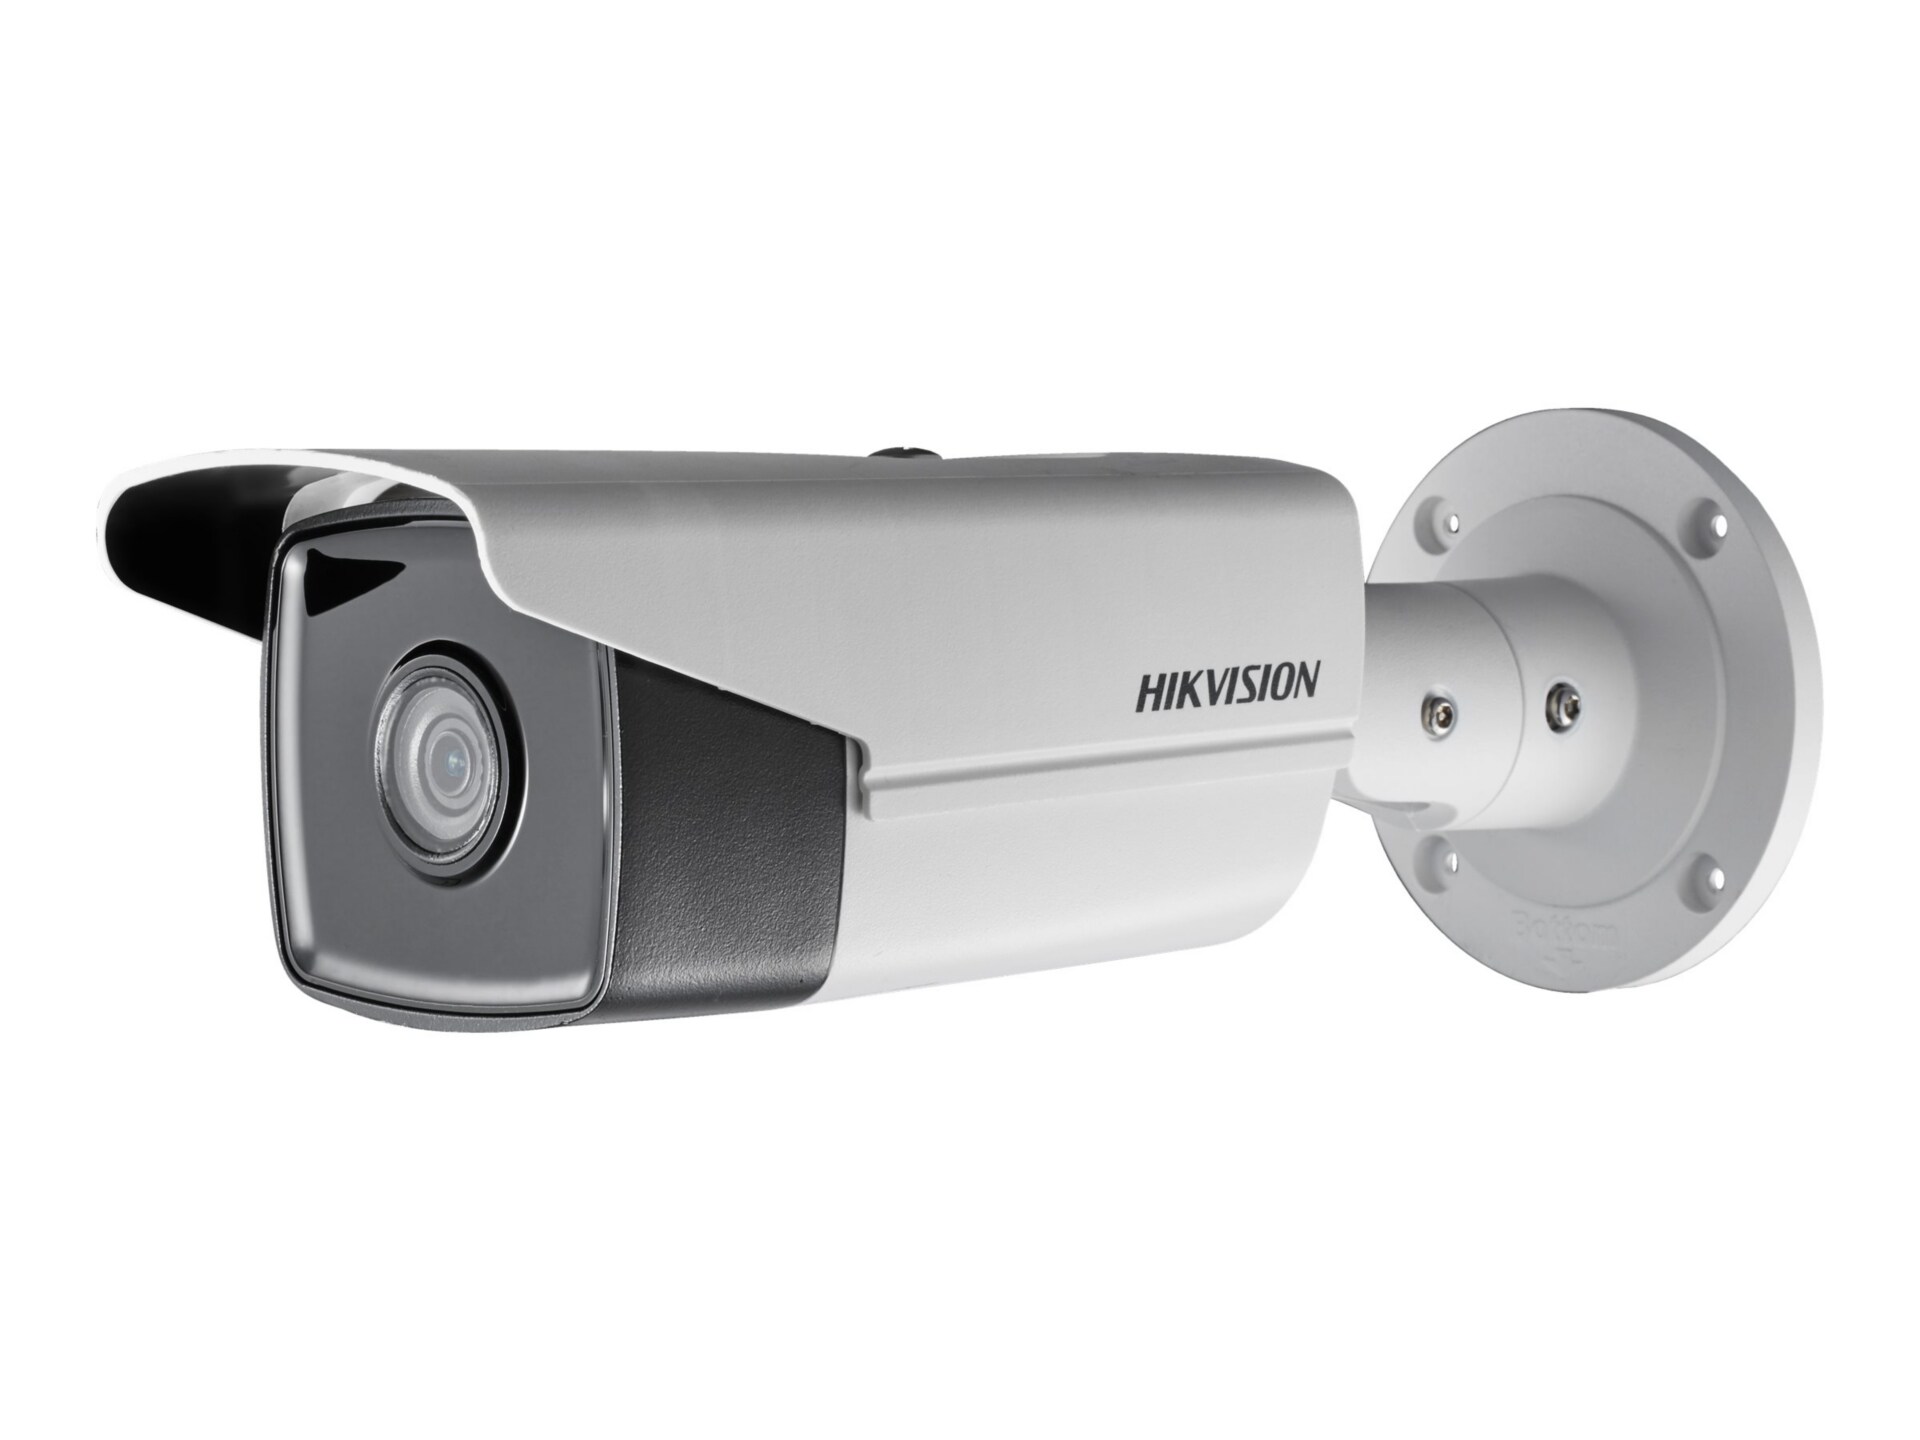 Hikvision 5 MP Network Bullet Camera DS-2CD2T55FWD-I5 - network surveillanc